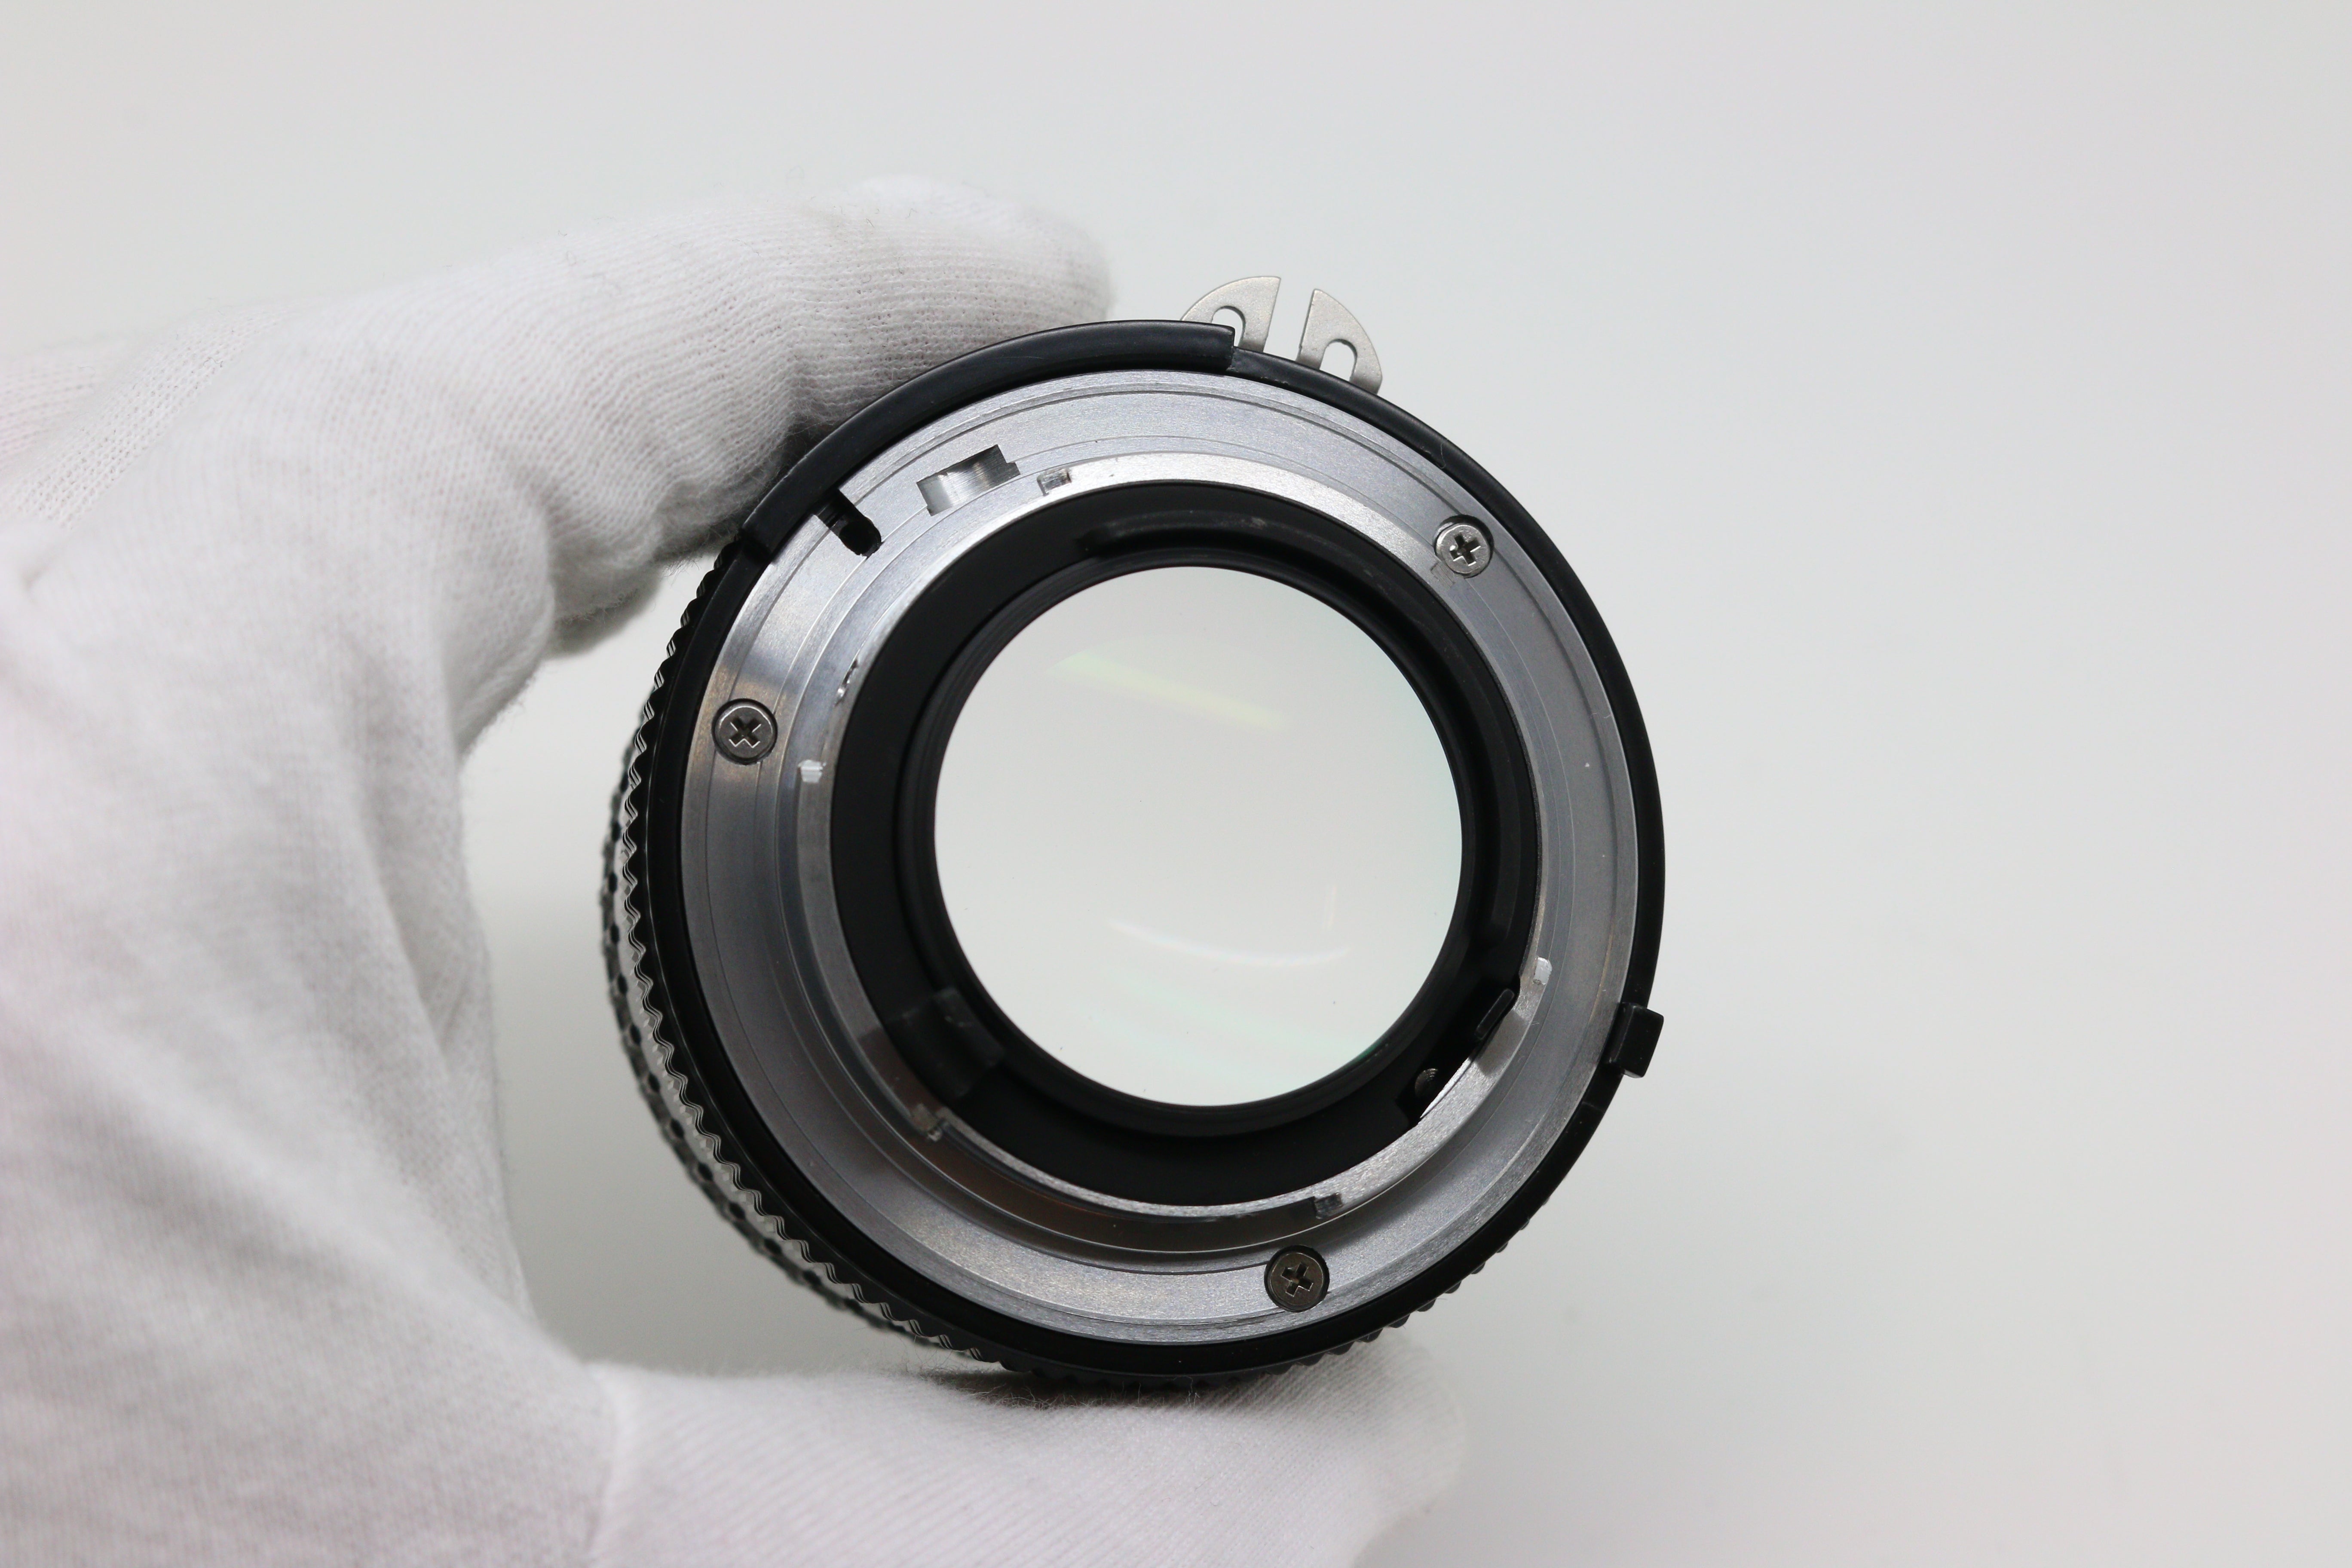 Nikon F3HP w/ Nikkor 50mm 1.4 AIS Lens